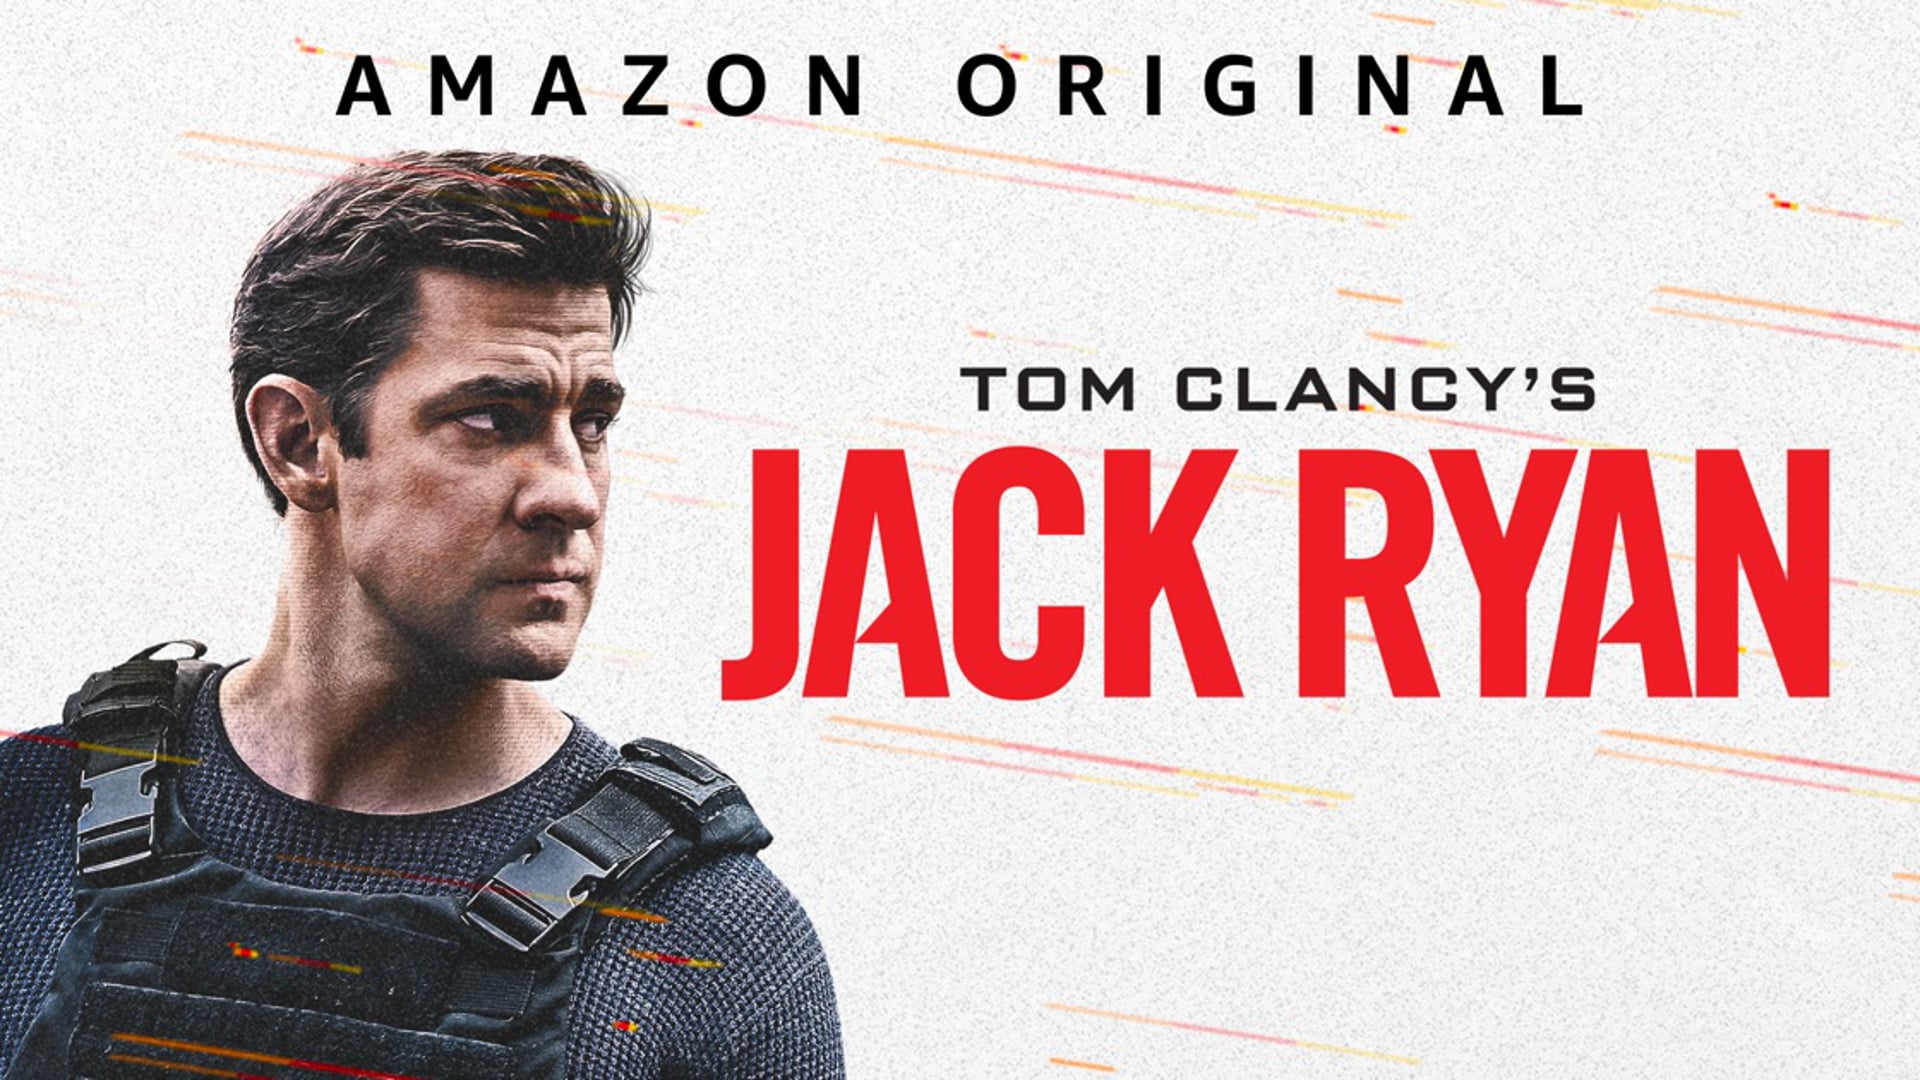 Tom Clancy's Jack Ryan (TV Series 2010-present)